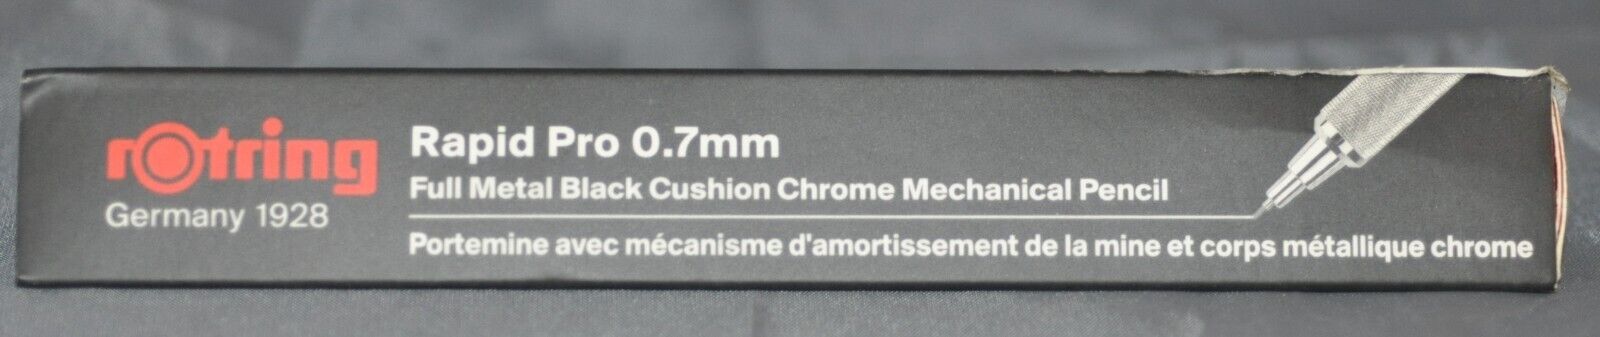 Rotring Rapid Pro 0.7mm Full Metal Blk Cushion Chrome Mechanical Pencil 1904256